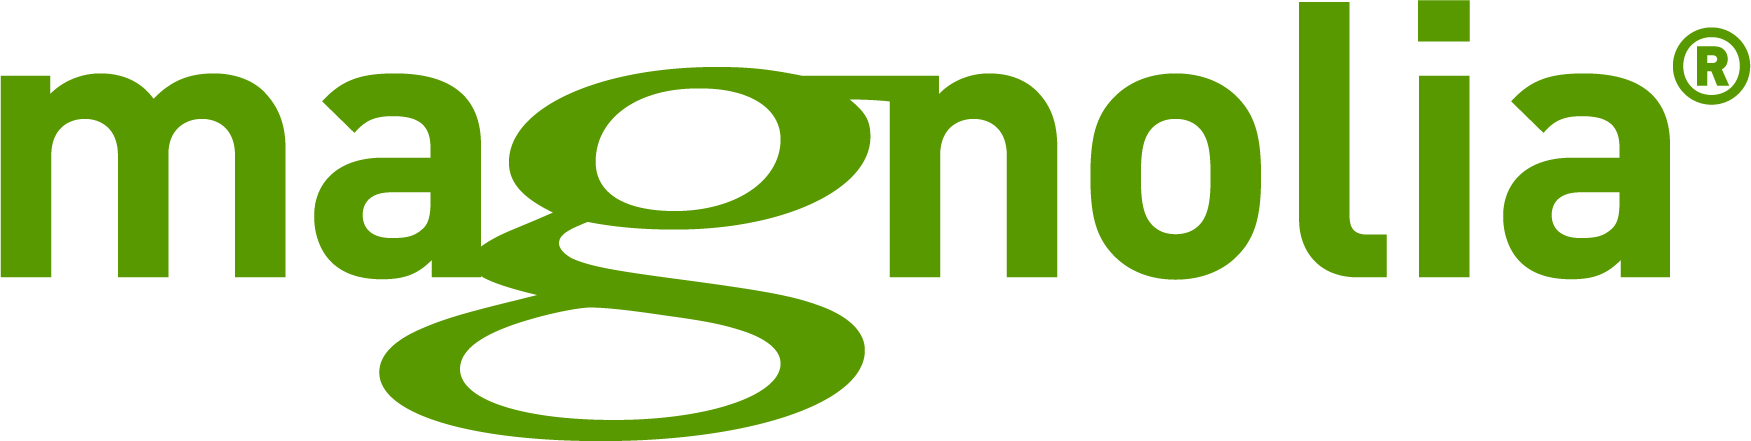 Magnolia6-logo-green599900